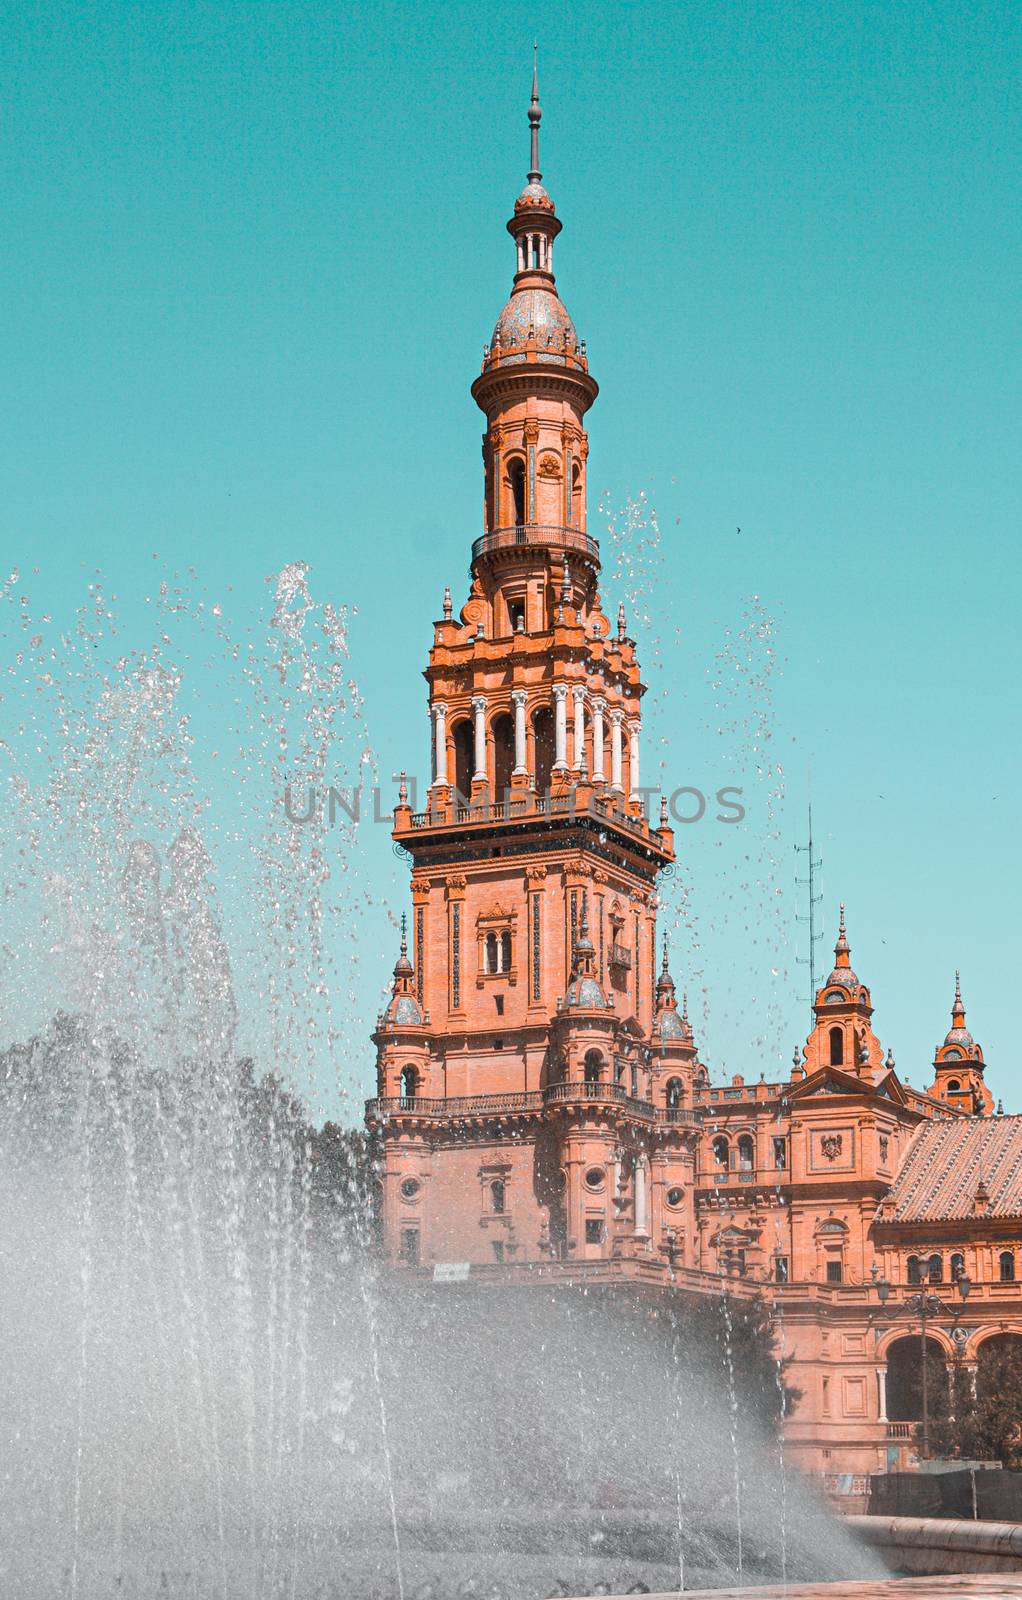 Spanish Square or Plaza de Espana in Sevilla,Spain. Teal and orange style